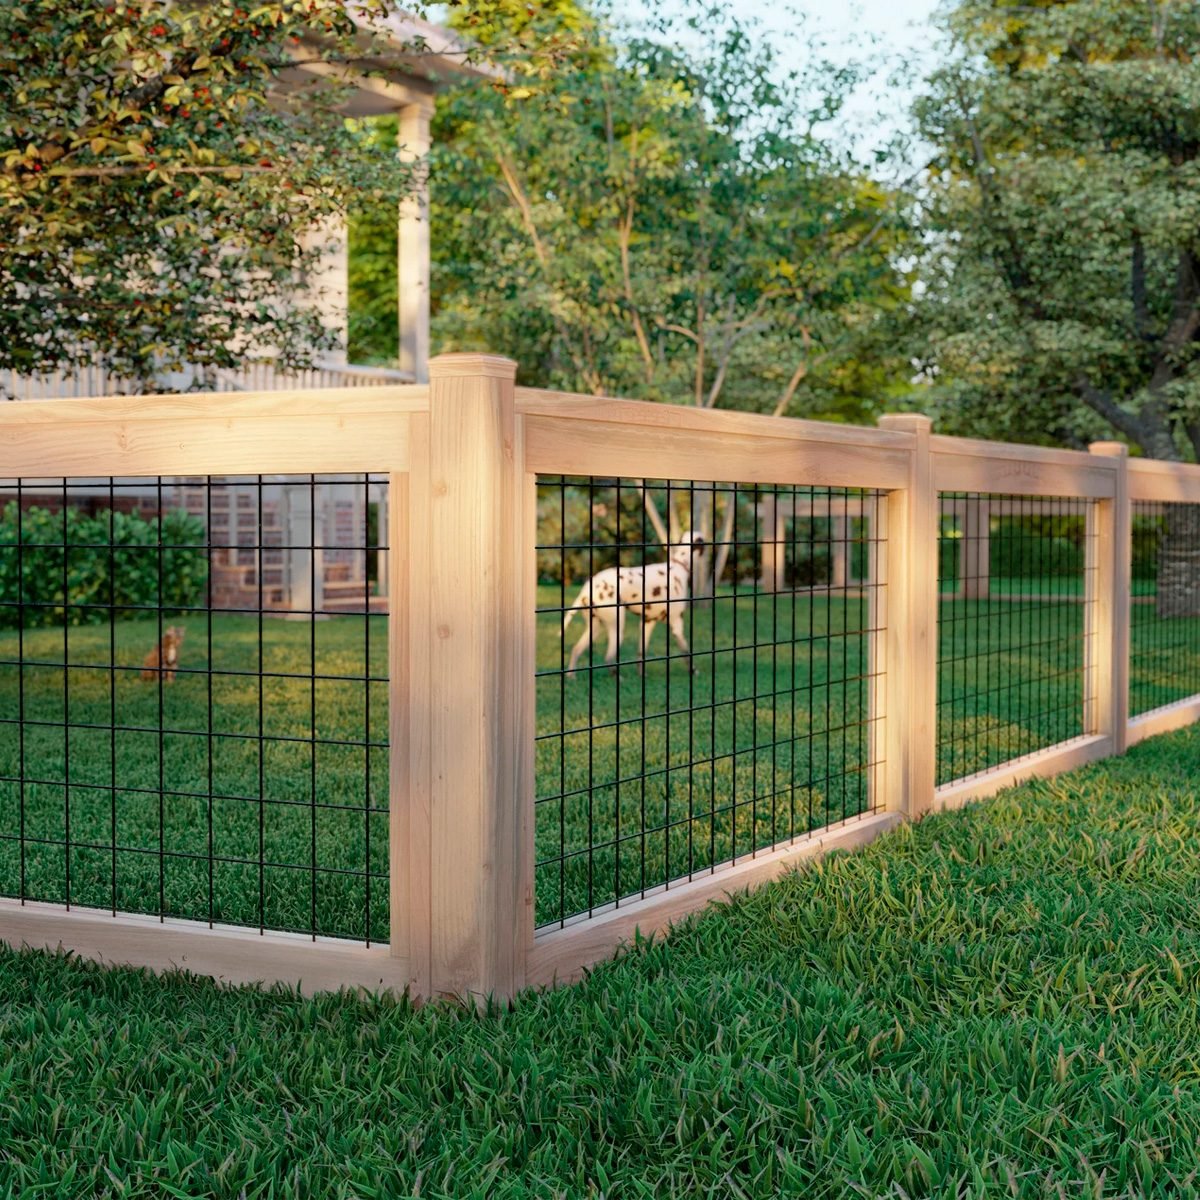 10 Unique Diy Fence Ideas The Family Handyman